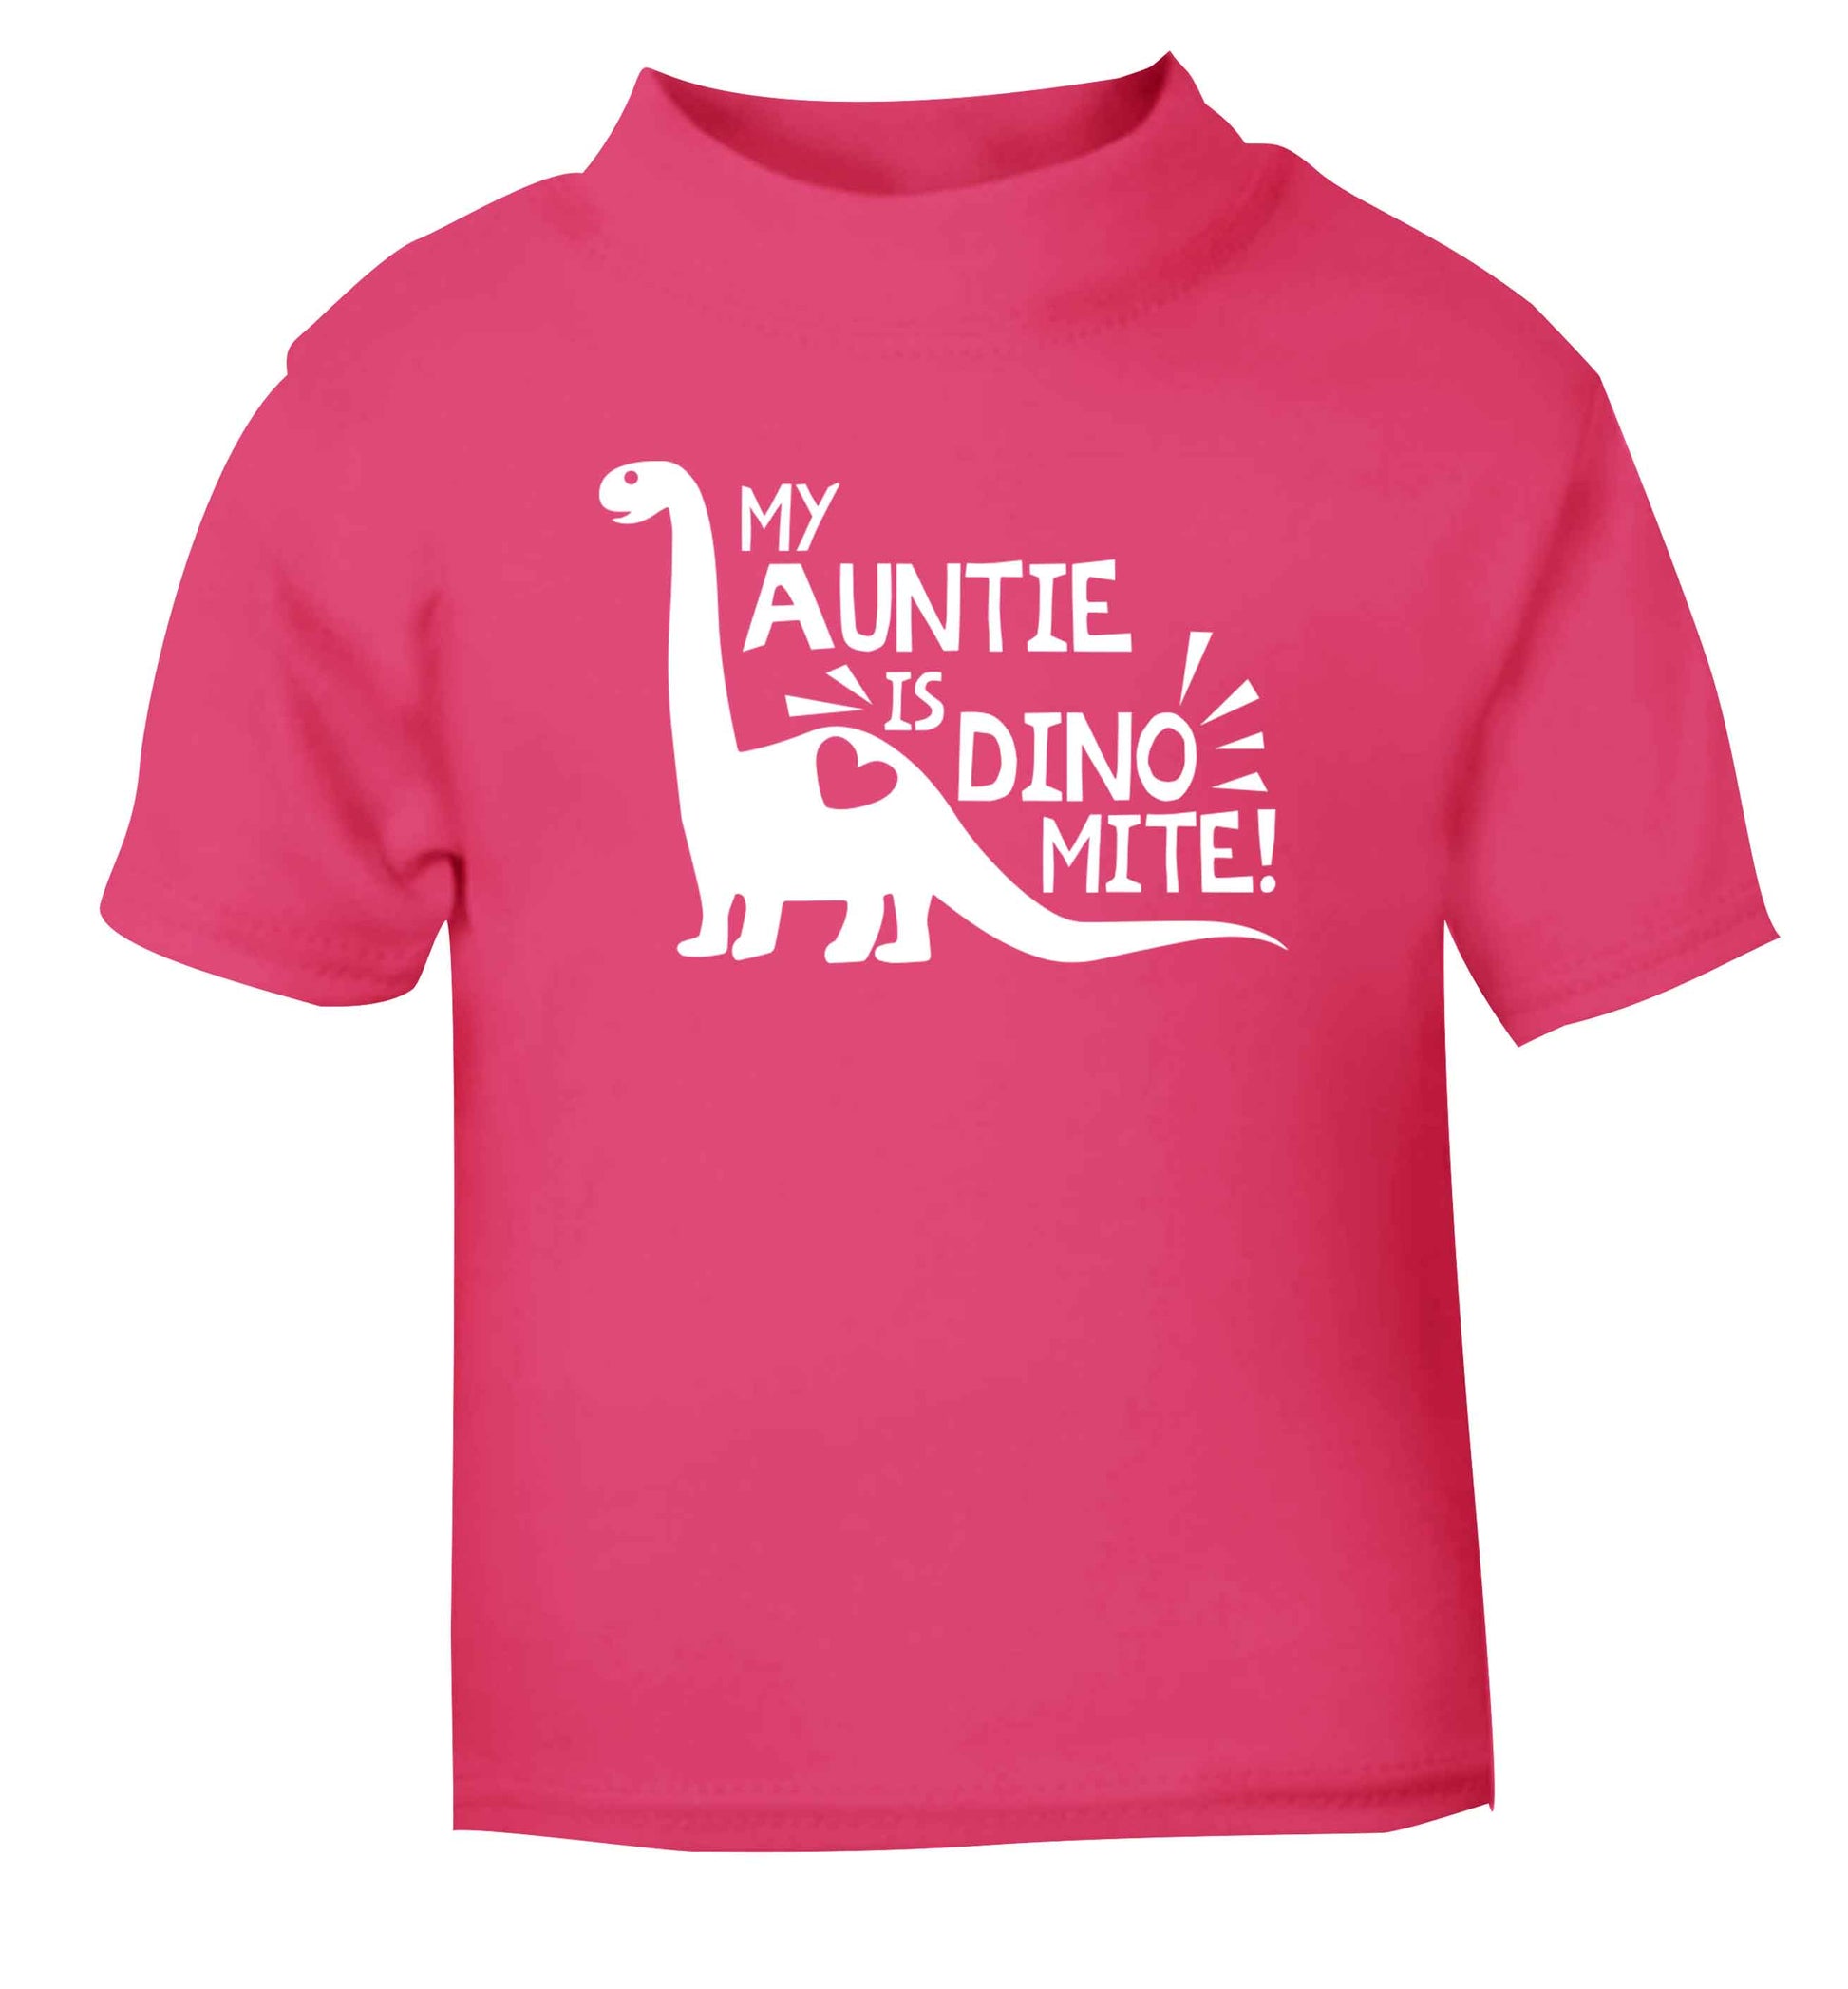 My auntie is dinomite! pink Baby Toddler Tshirt 2 Years